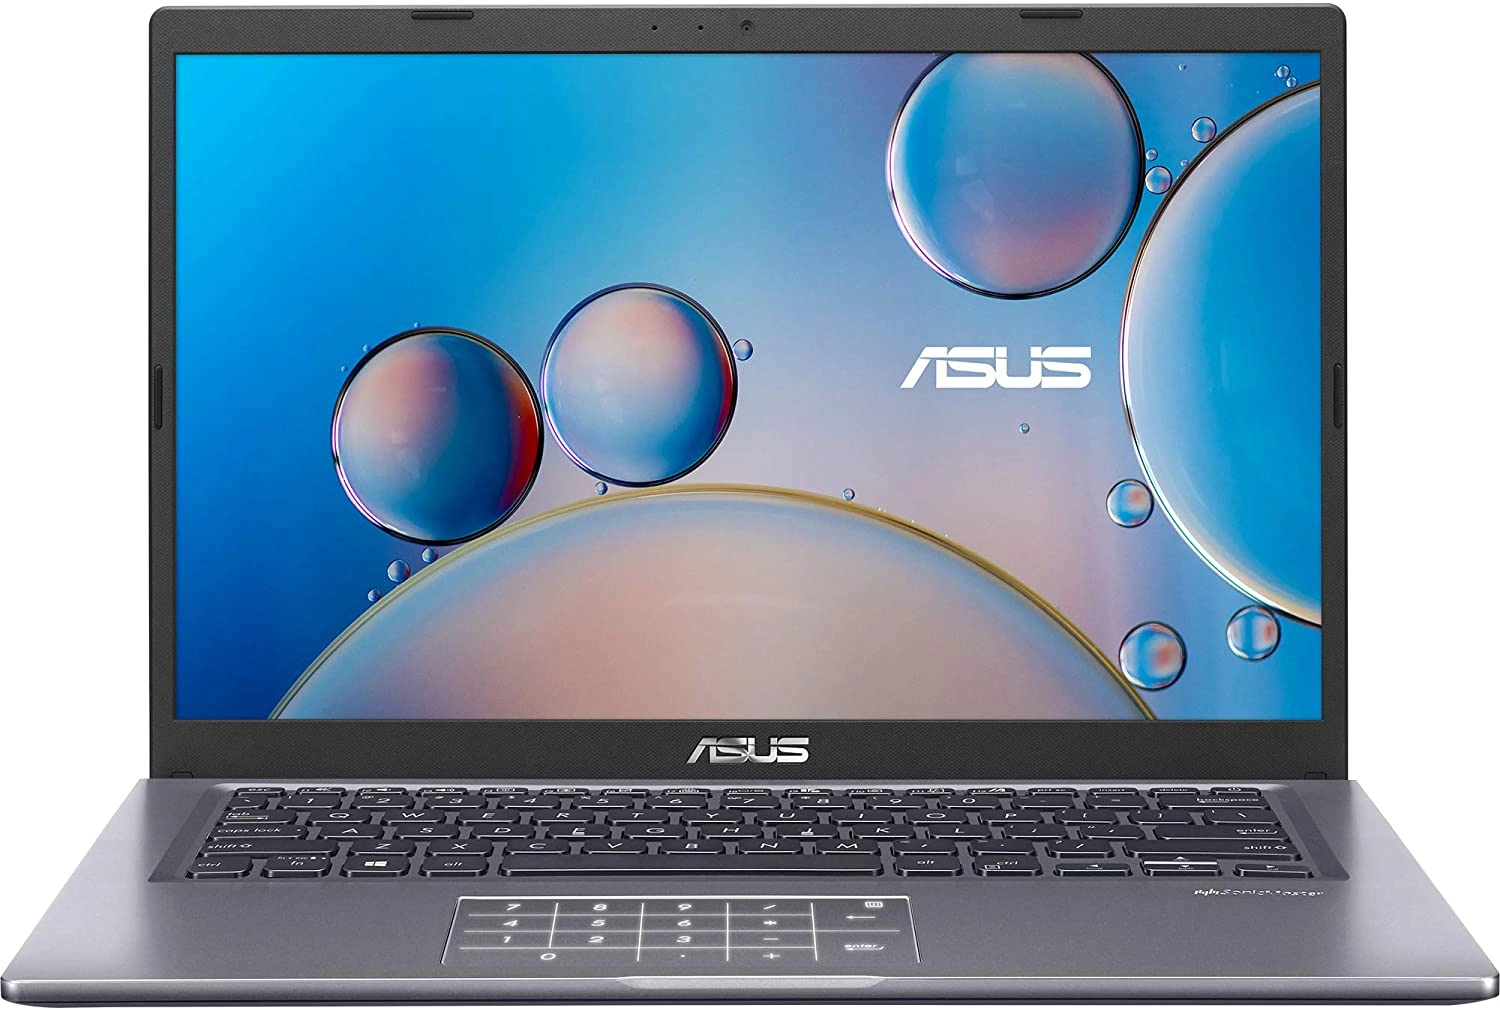 Asus M415DA-EK274 laptop image